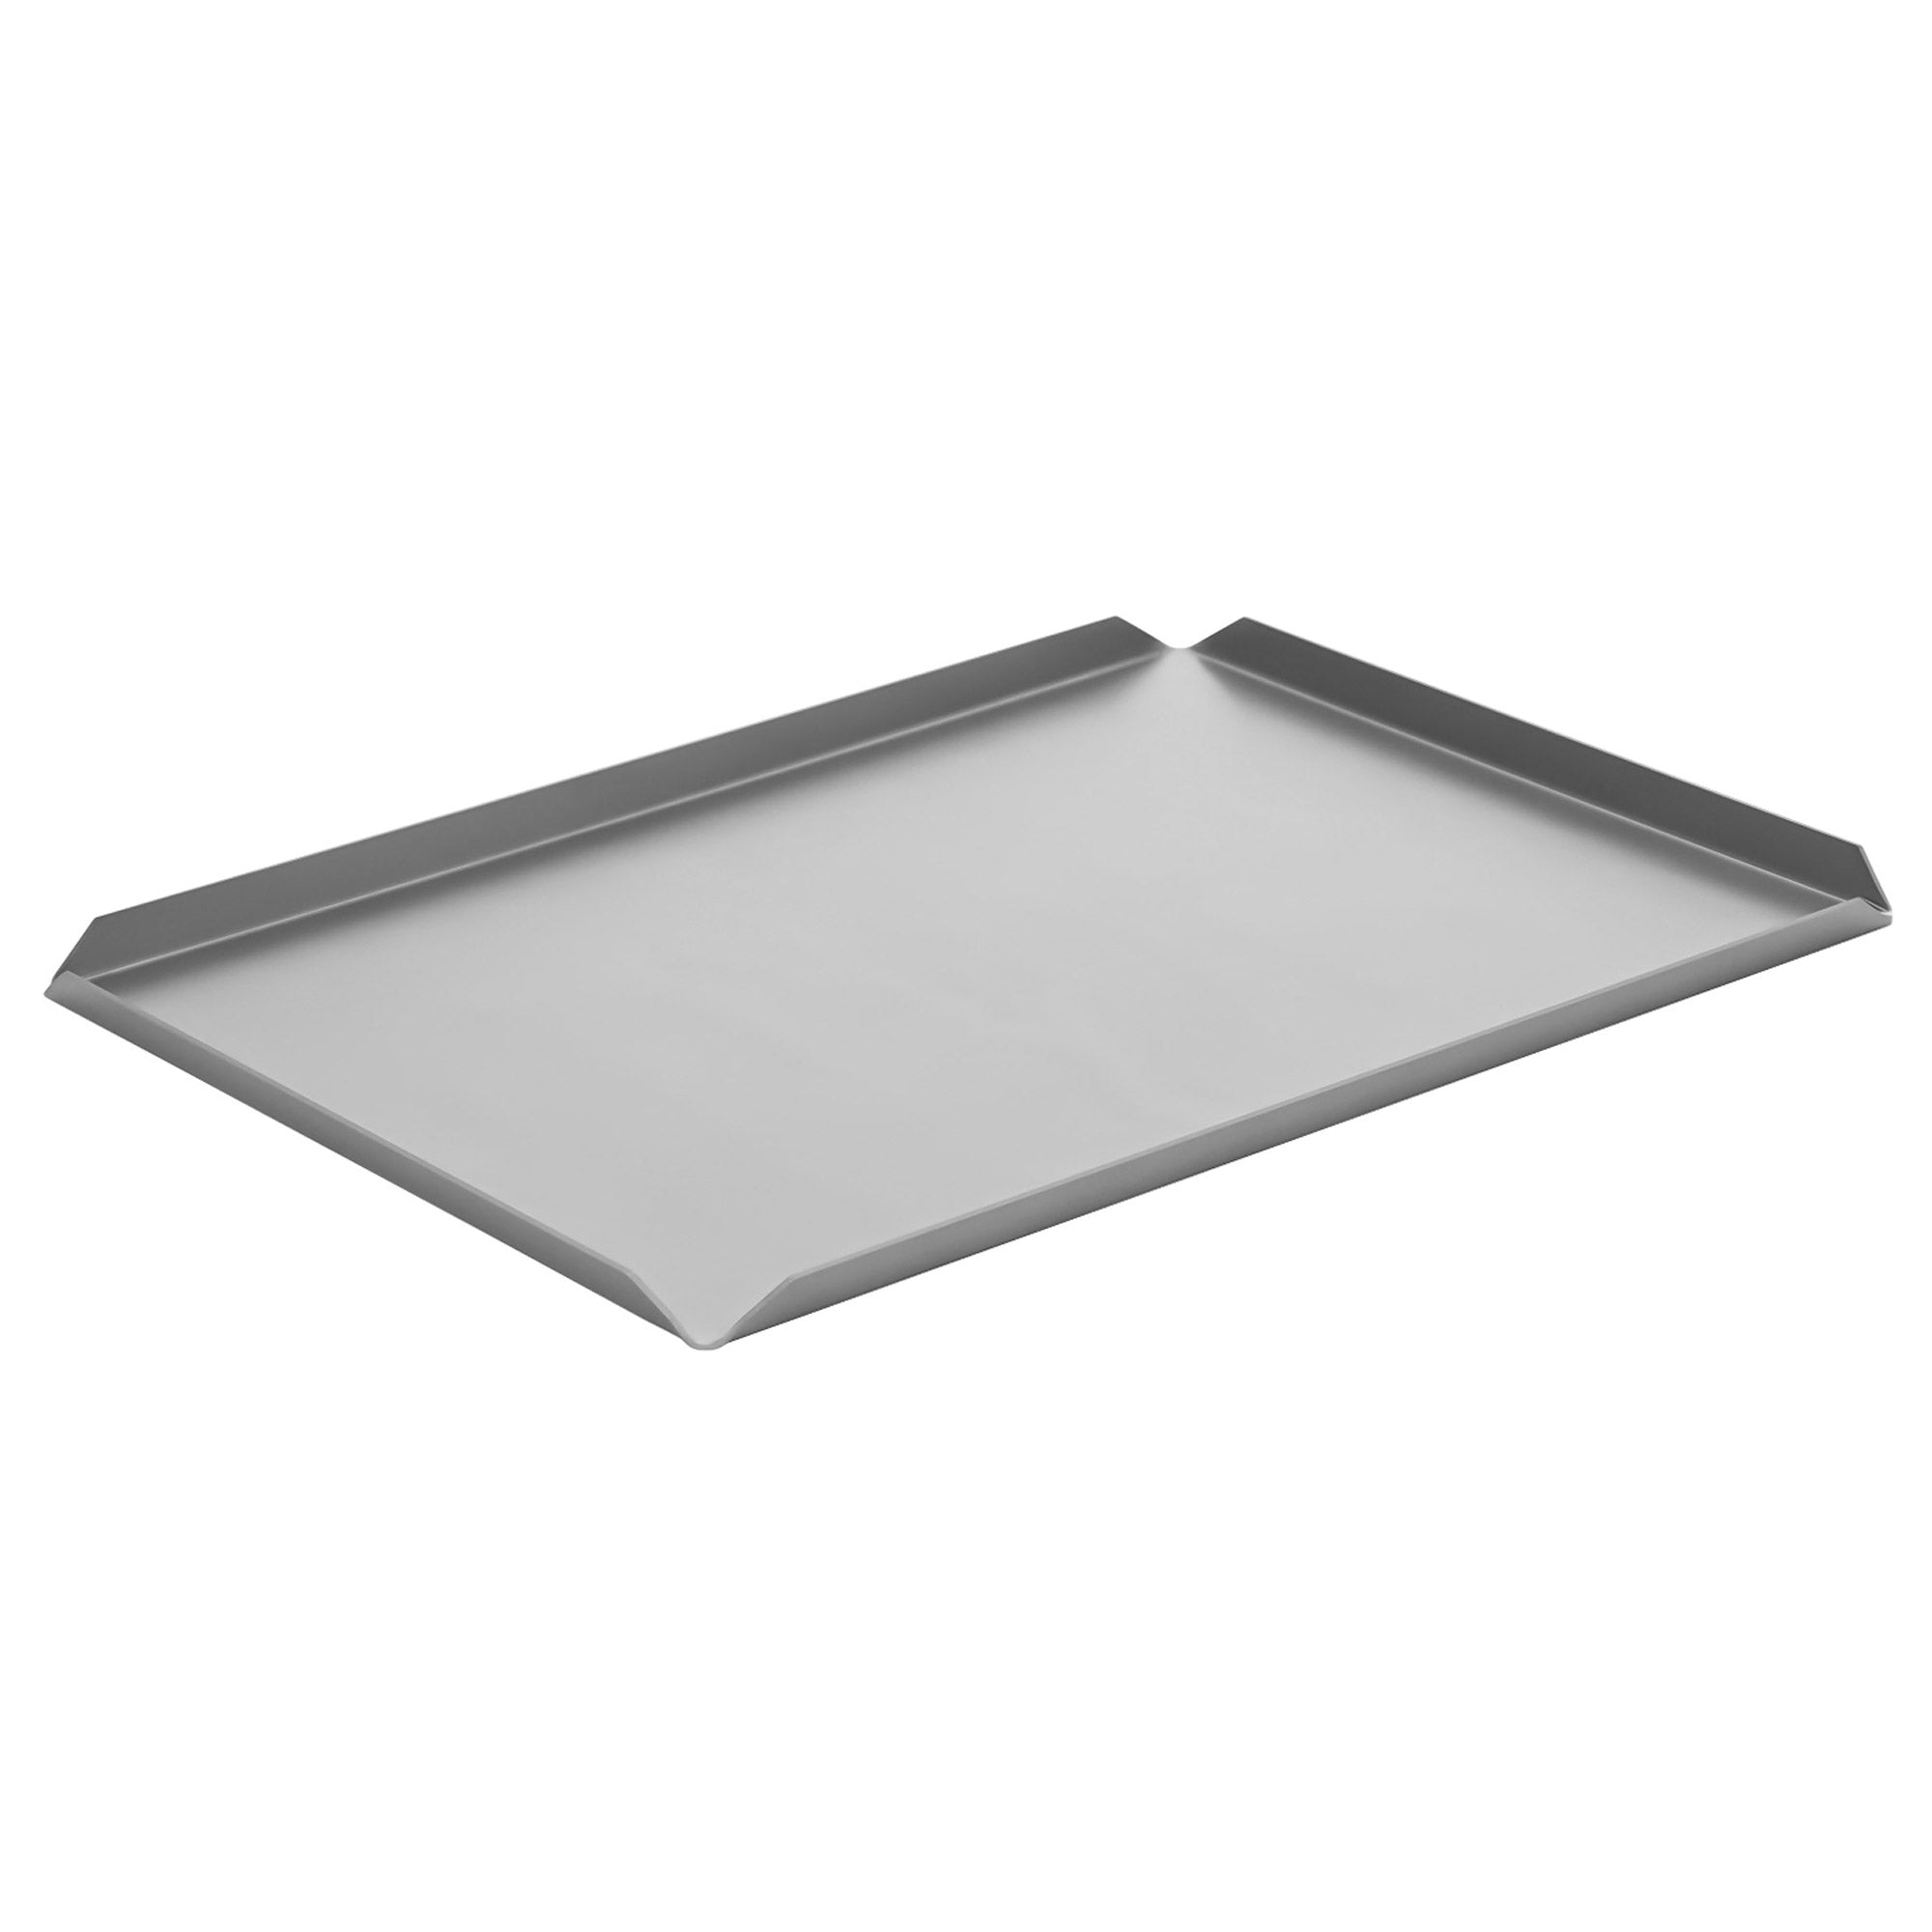 (5 stk.) Slik- og præsentationsplade af aluminium - 400 x 250 x 10 mm - aluminium